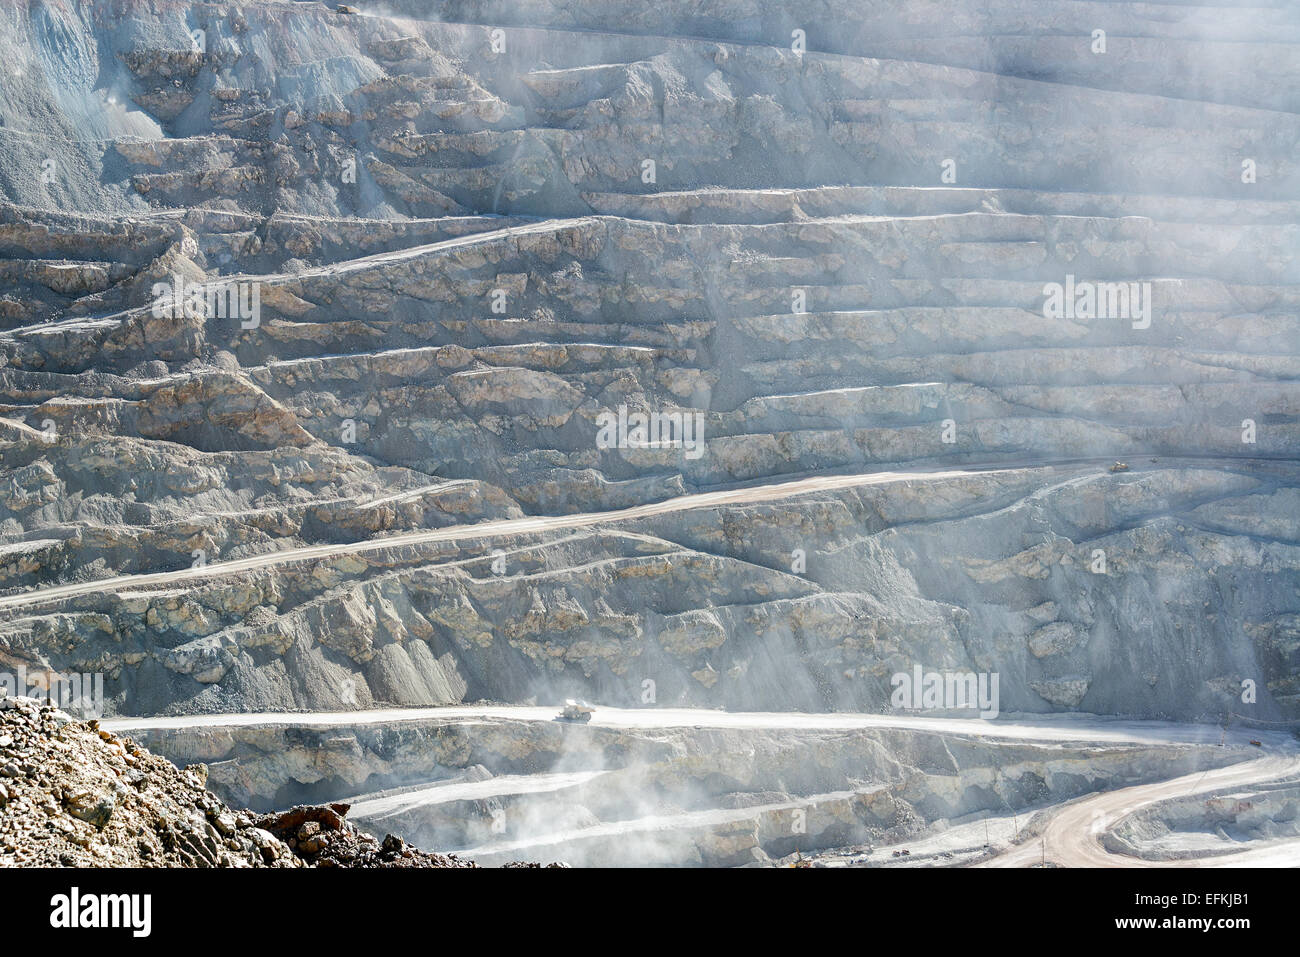 View of the open pit copper mine of Chuquicamata, Chile Stock Photo